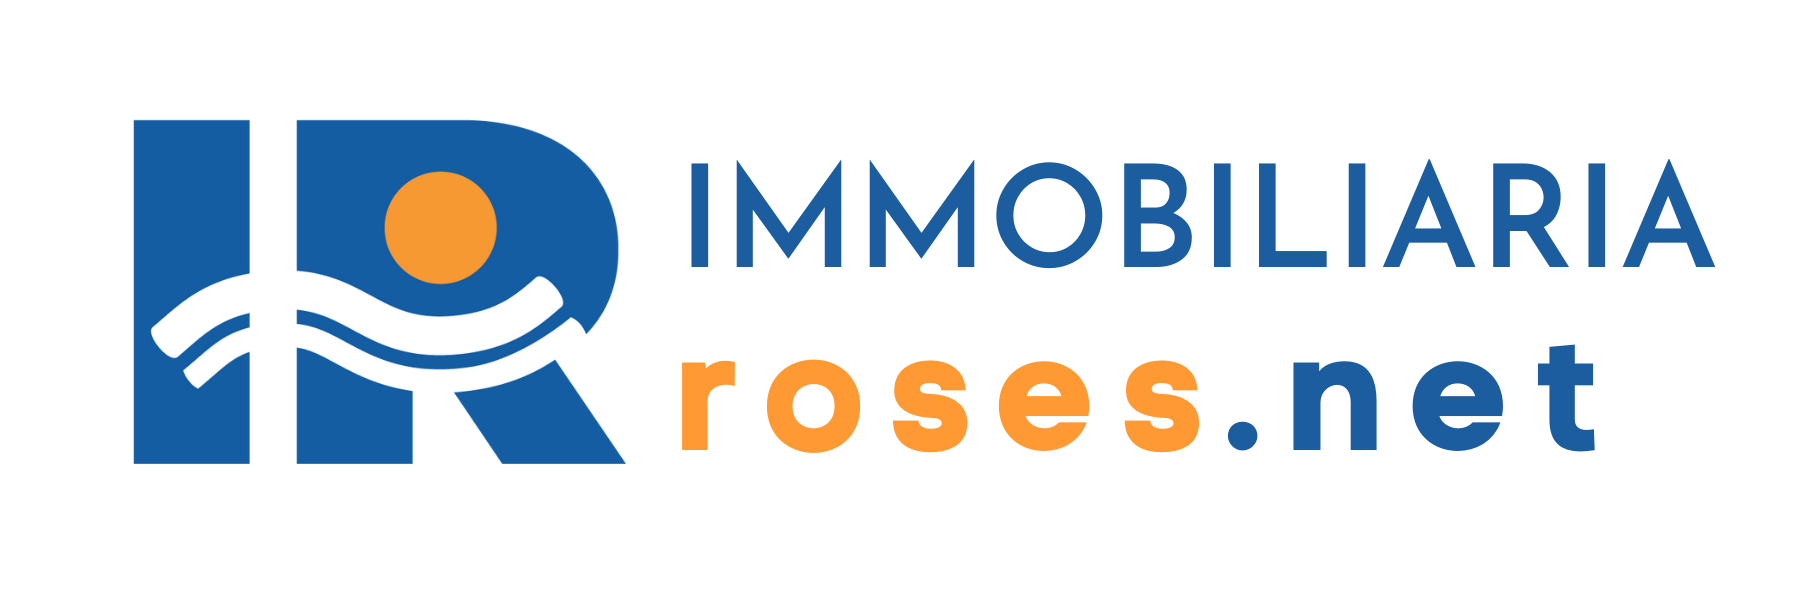 Inmobiliaria Immo Roses.net - Inmobiliaria Asociada Costa Brava